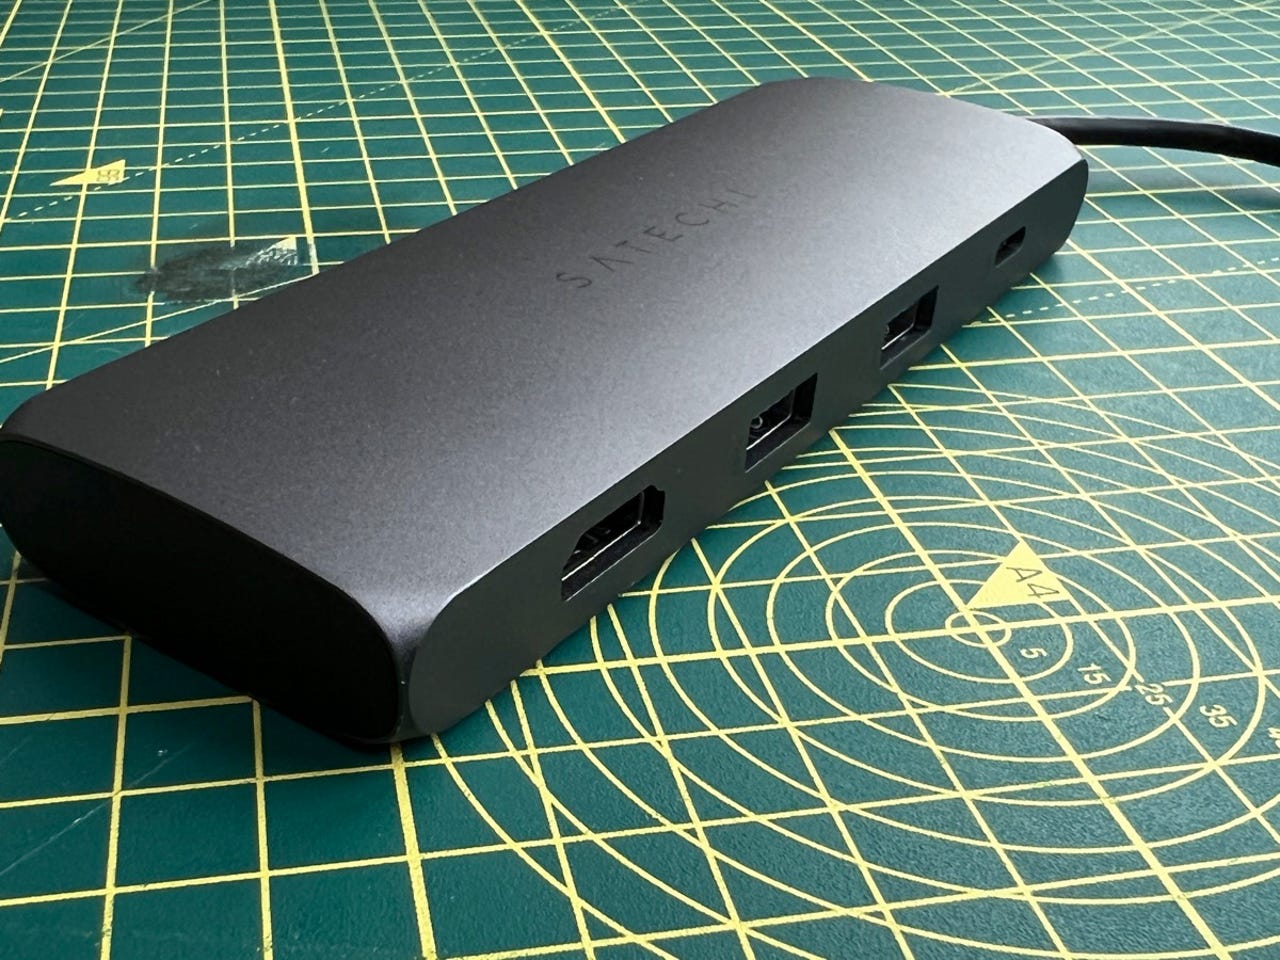 Satechi USB-C Hybrid Multiport adaptor